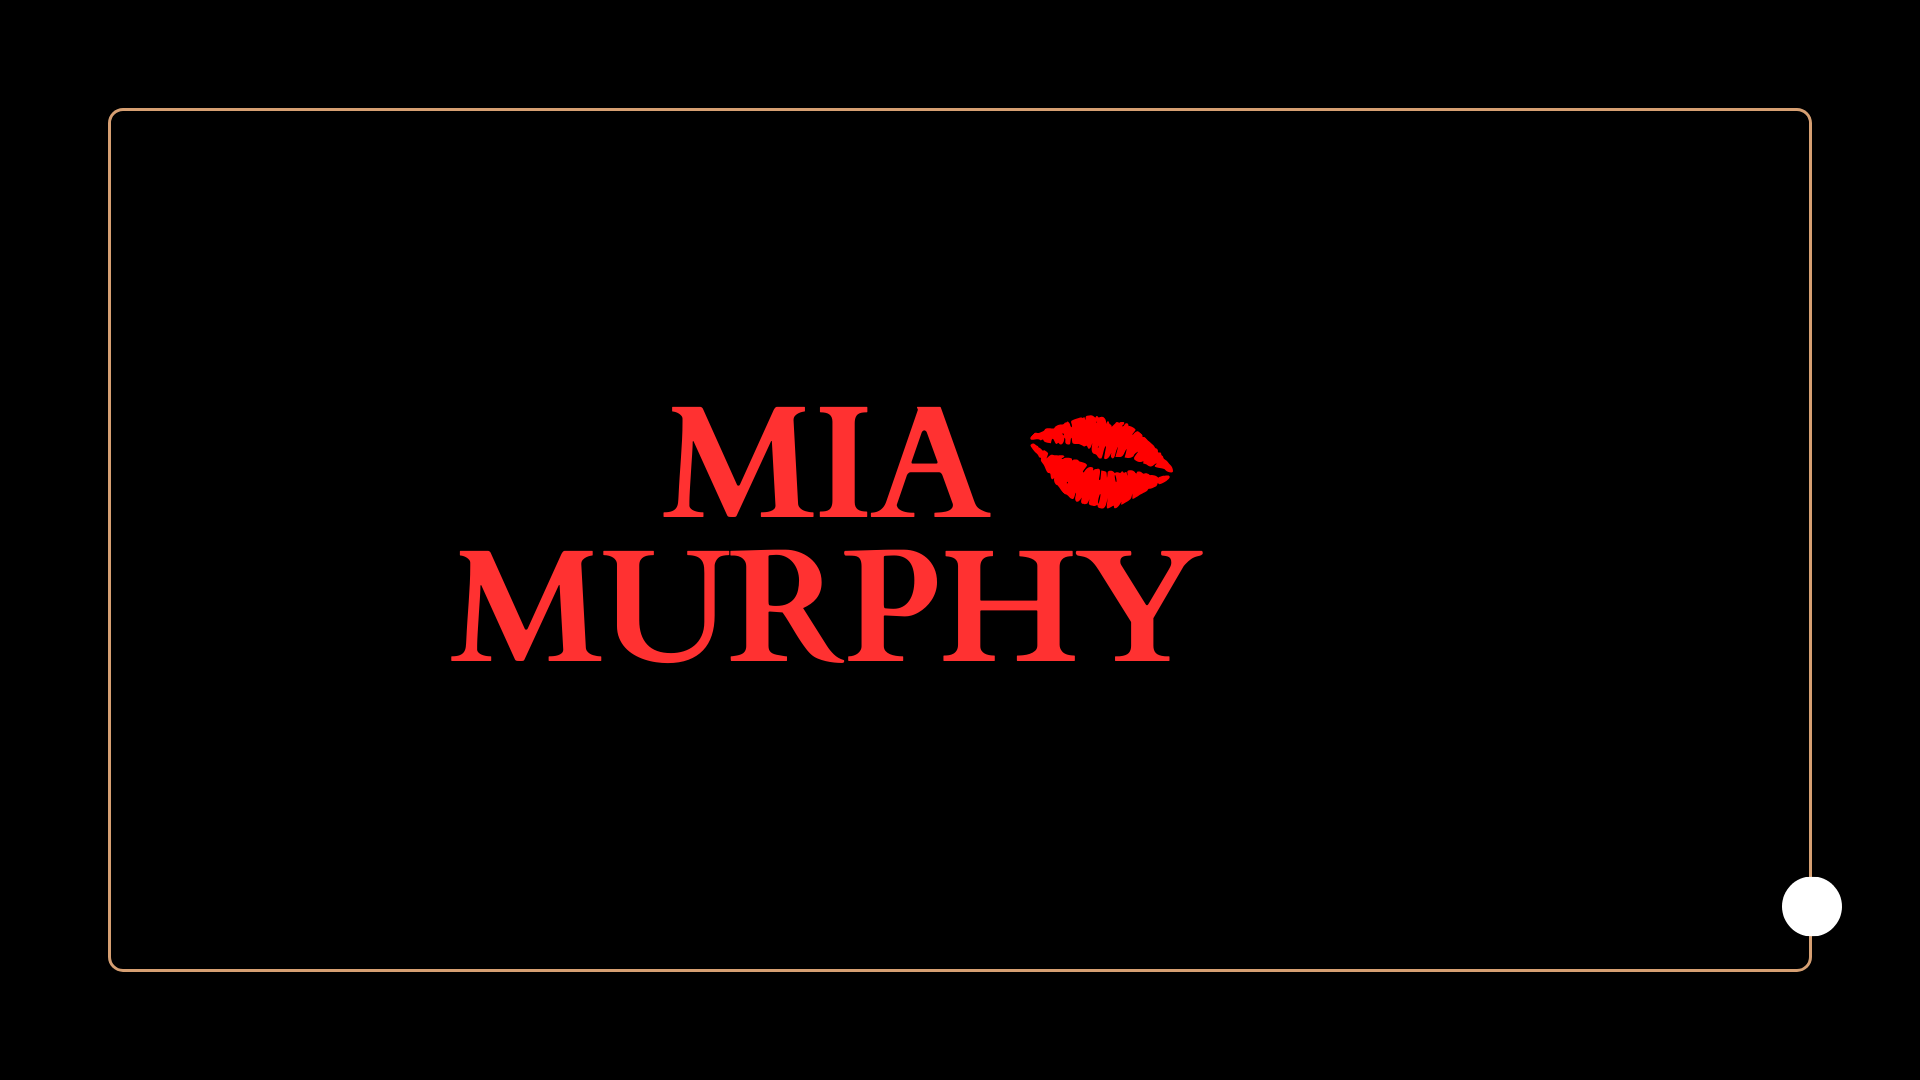 mia-murphy . image: 1